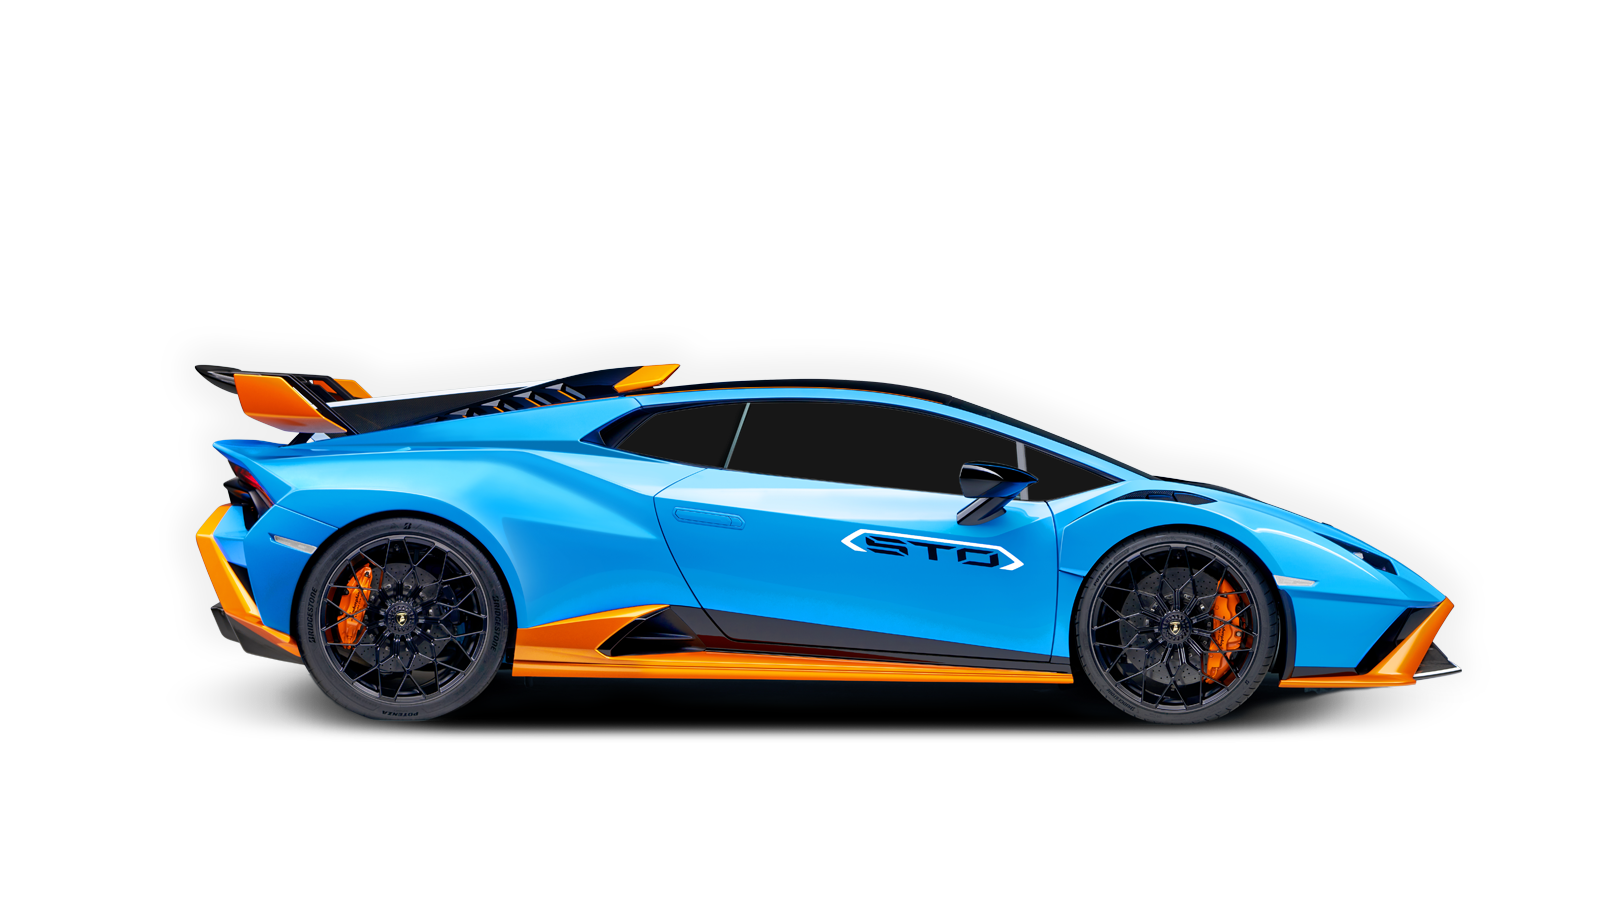 Automobili Lamborghini Official Website Lamborghini Com